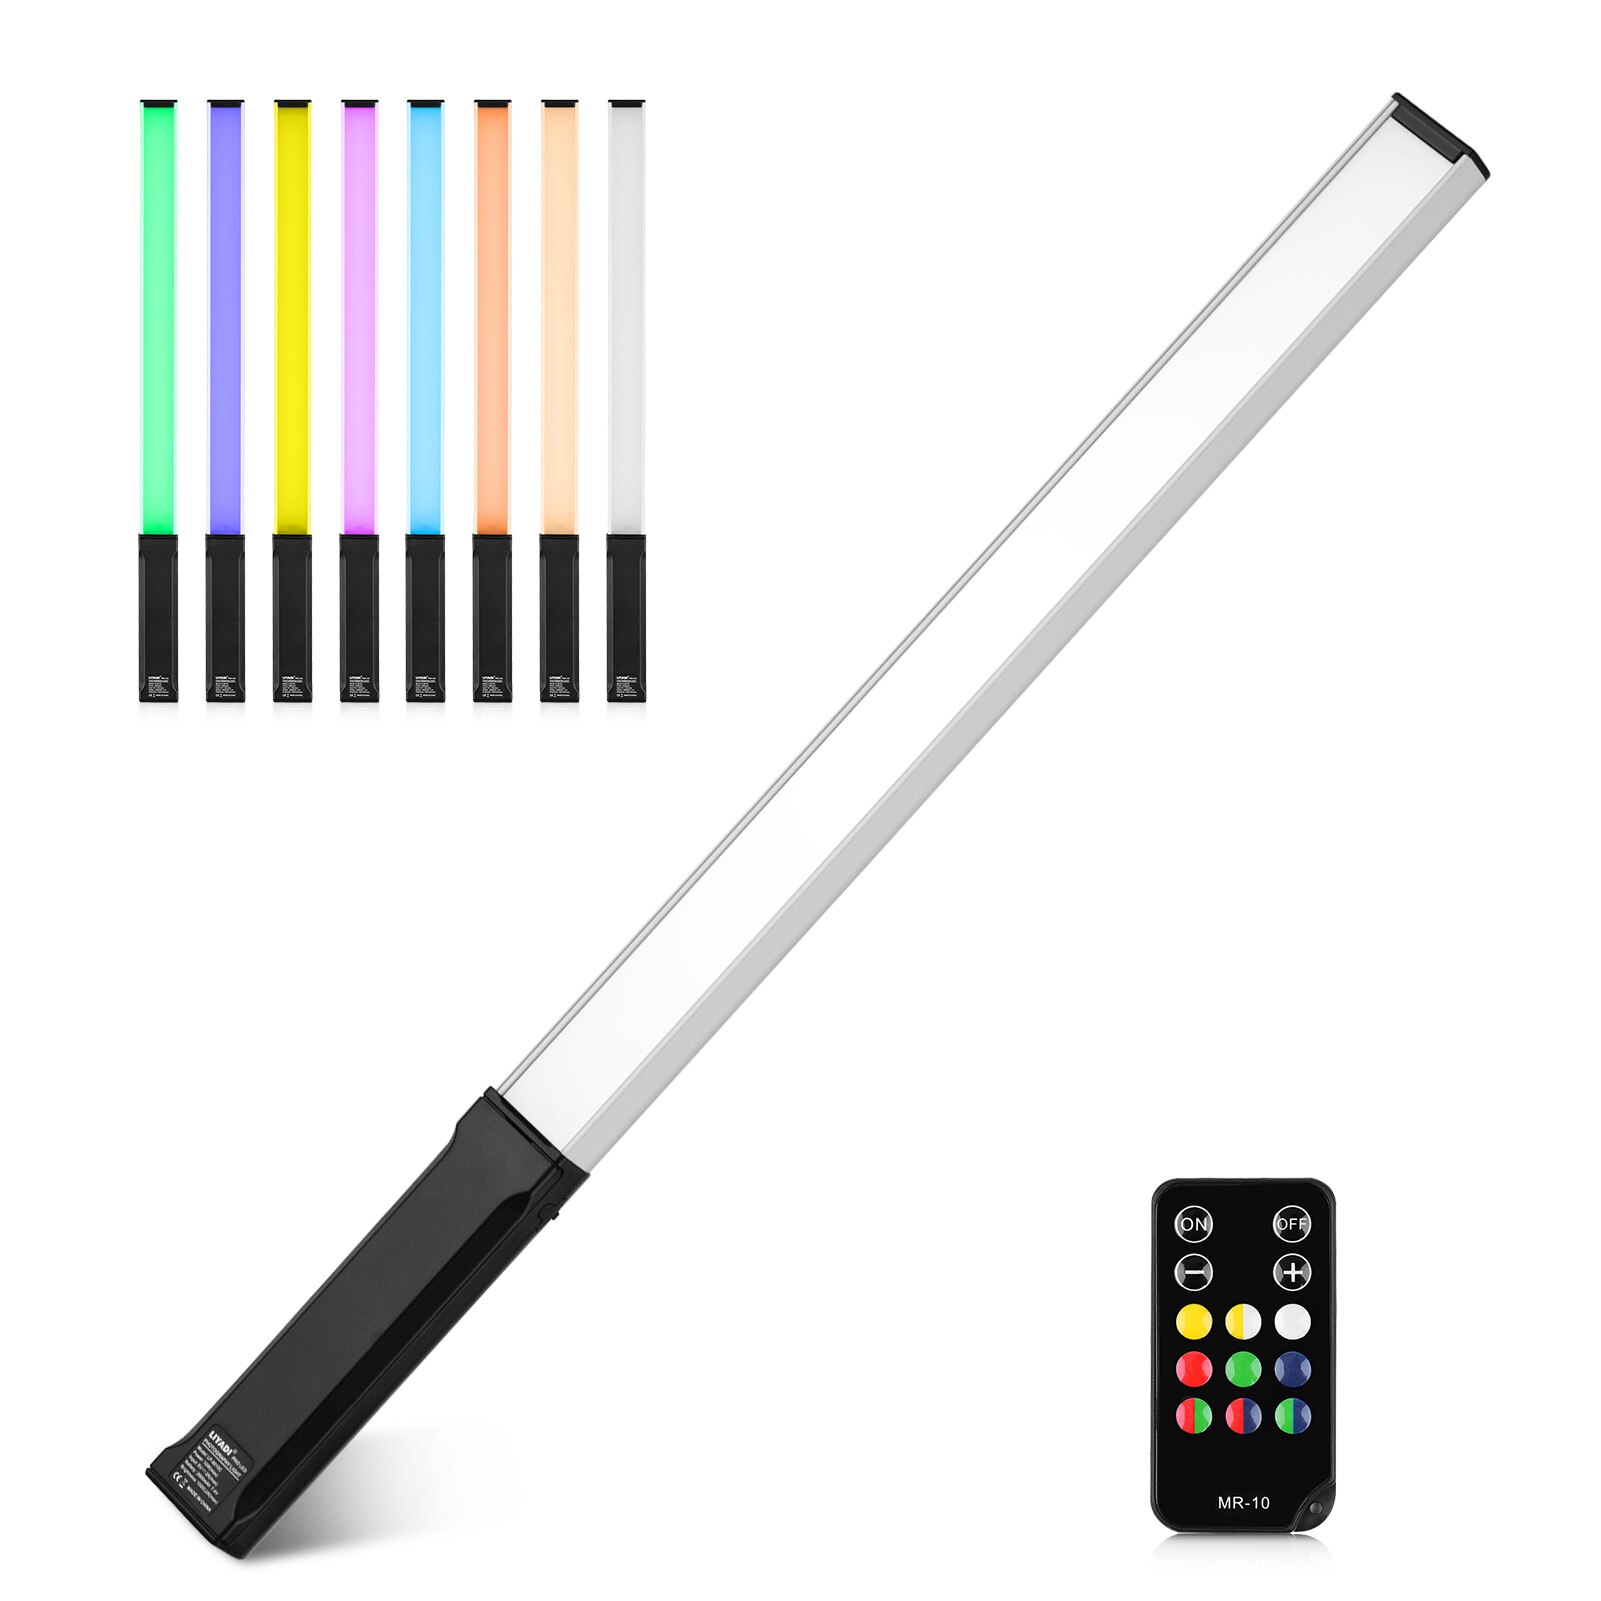 RGB Handheld LED Light Wand Rechargeable Photography Light Stick 10 Lighting Modes 12 Brightness Levels 1000 Lumens 3200-5600K